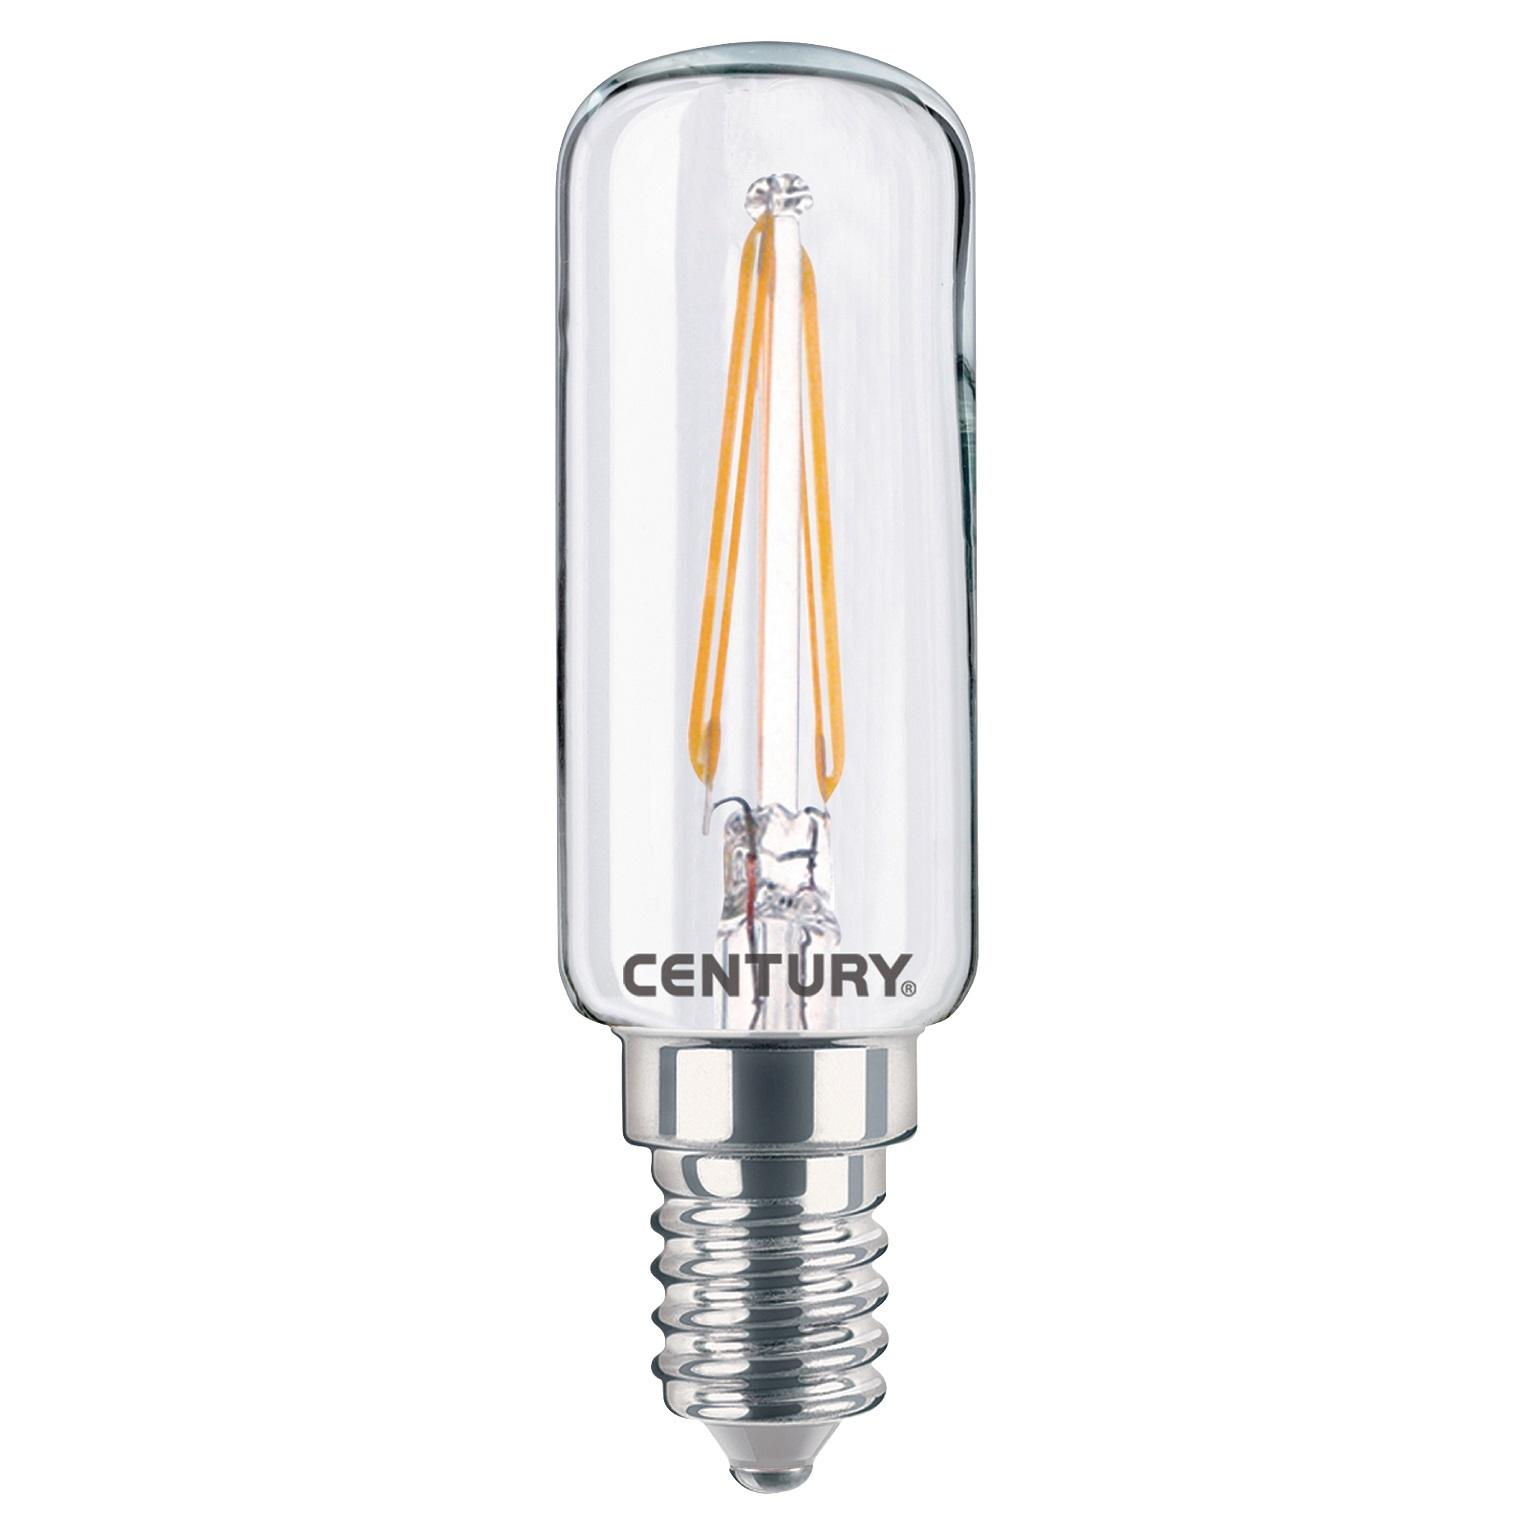 Naaimachine Lamp - E14 - LED - Century